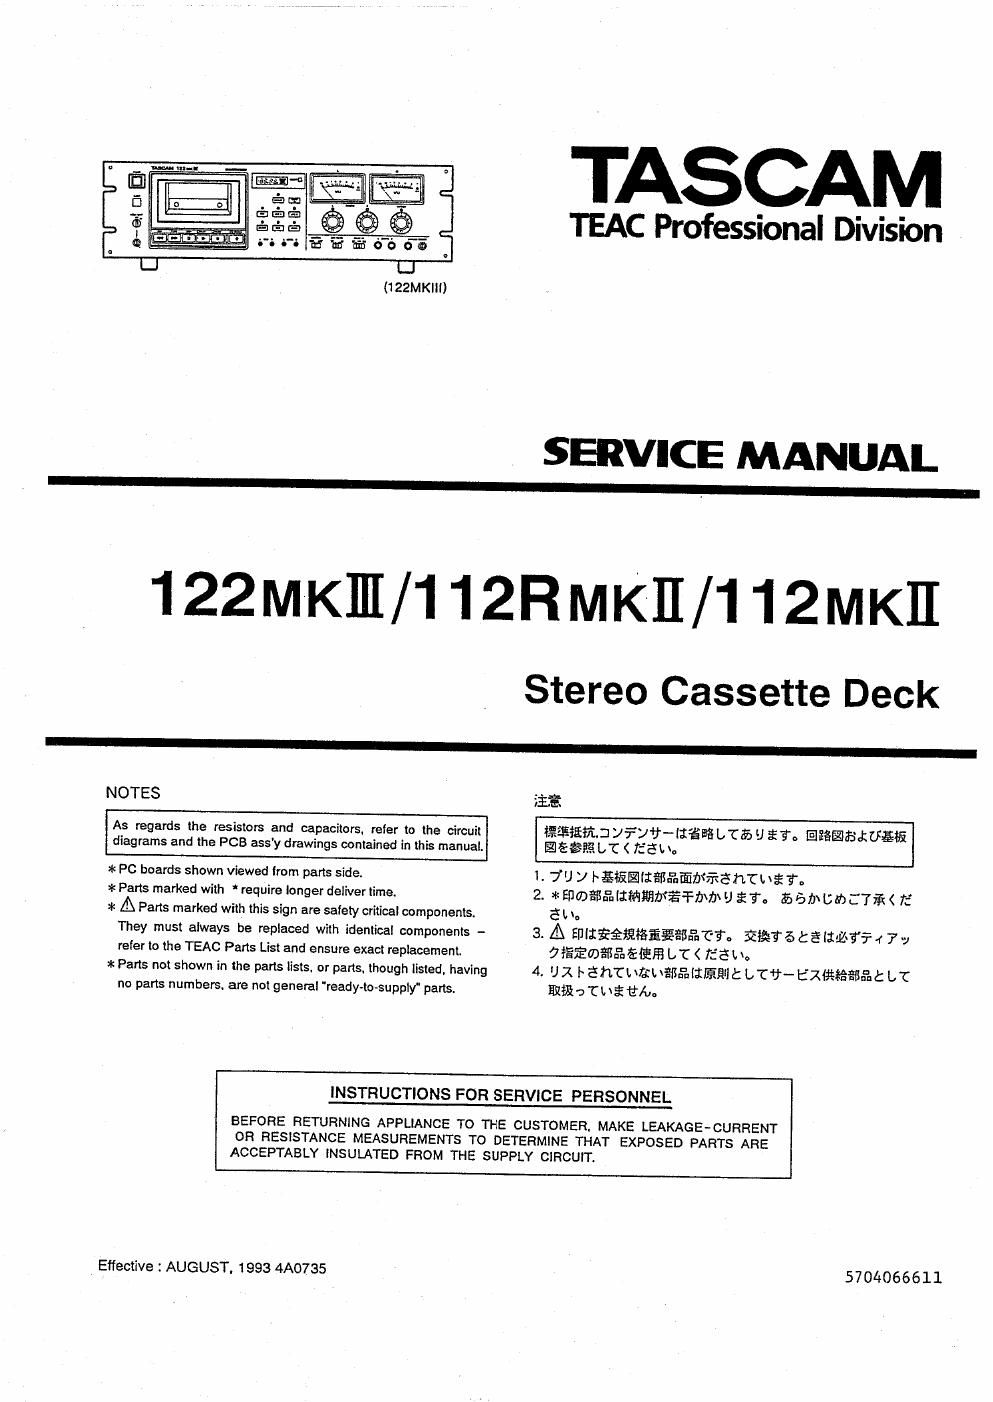 tascam 112 mk2 service manual